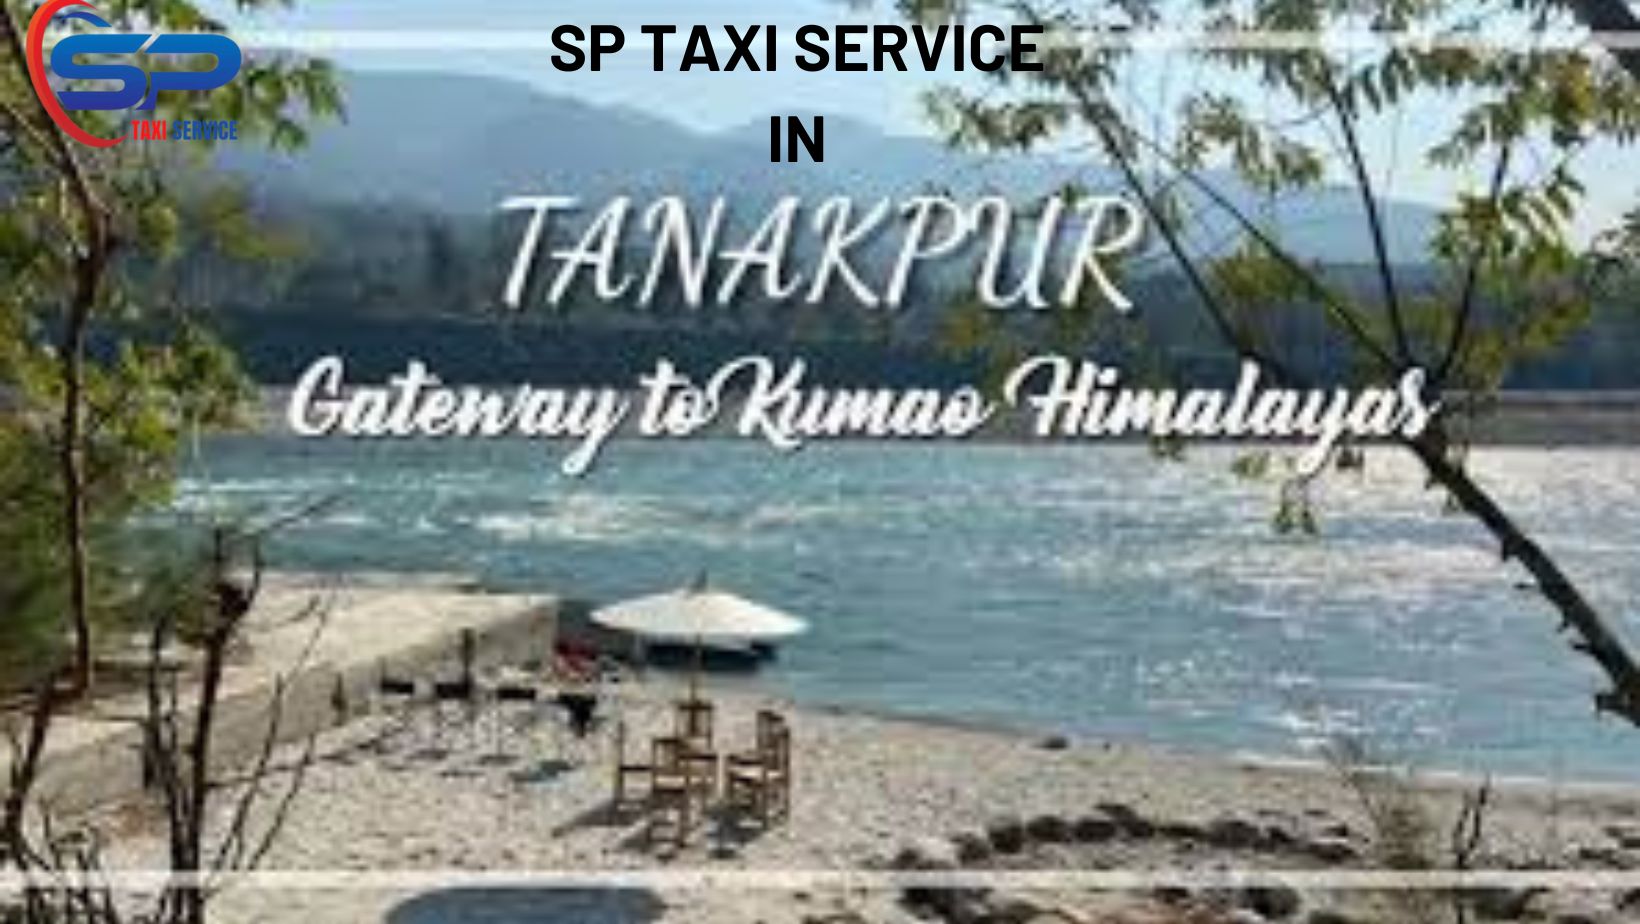 Tanakpur Taxi service